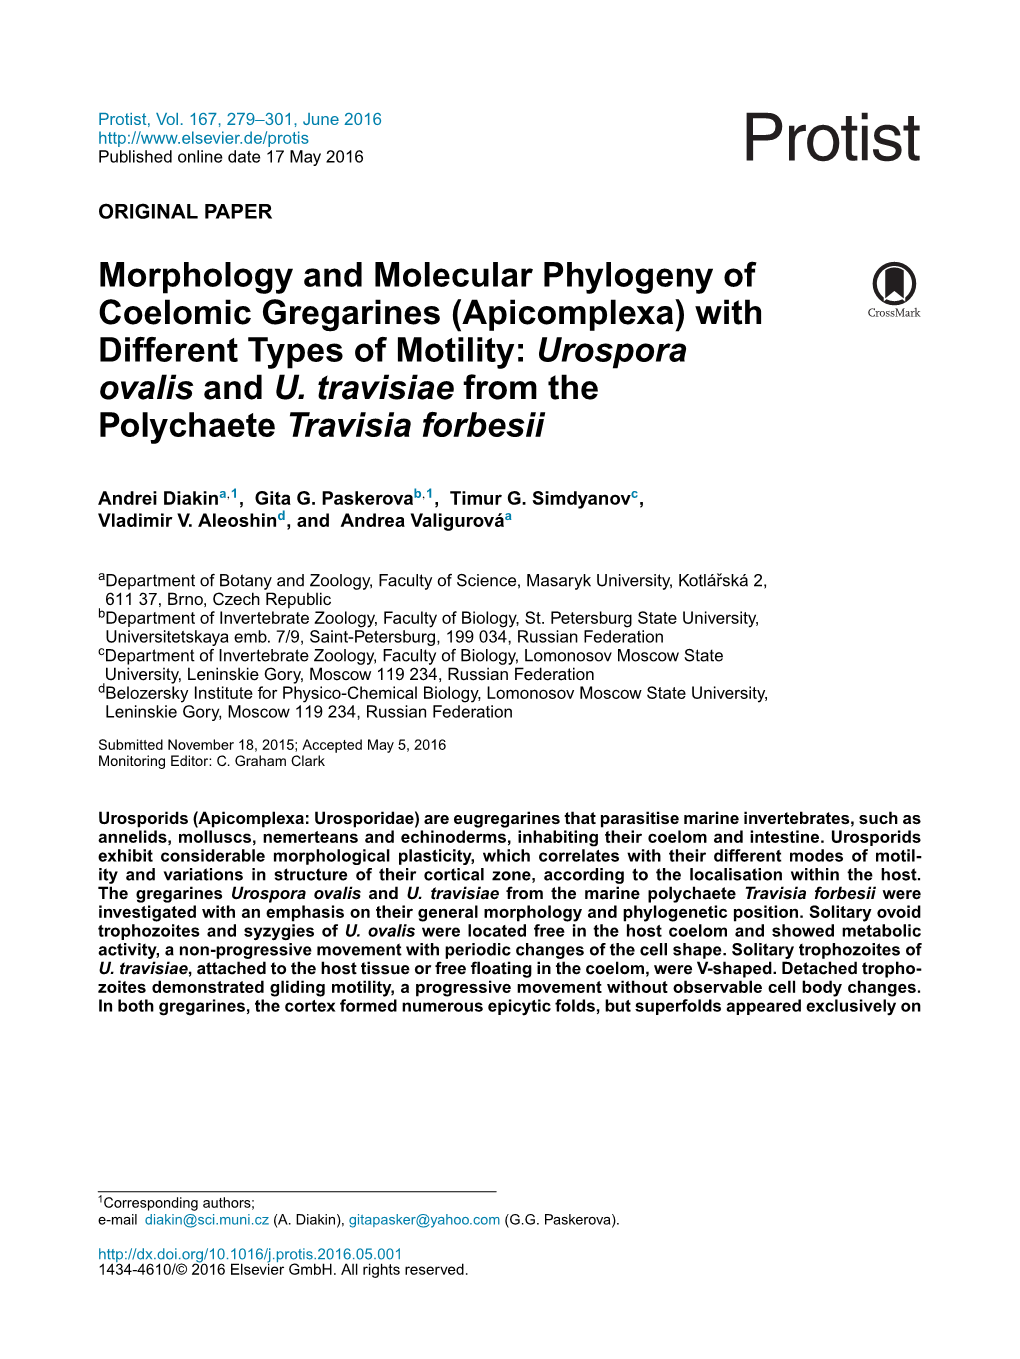 (Apicomplexa) with Different Types of Motility: Urospora Ovalis and U